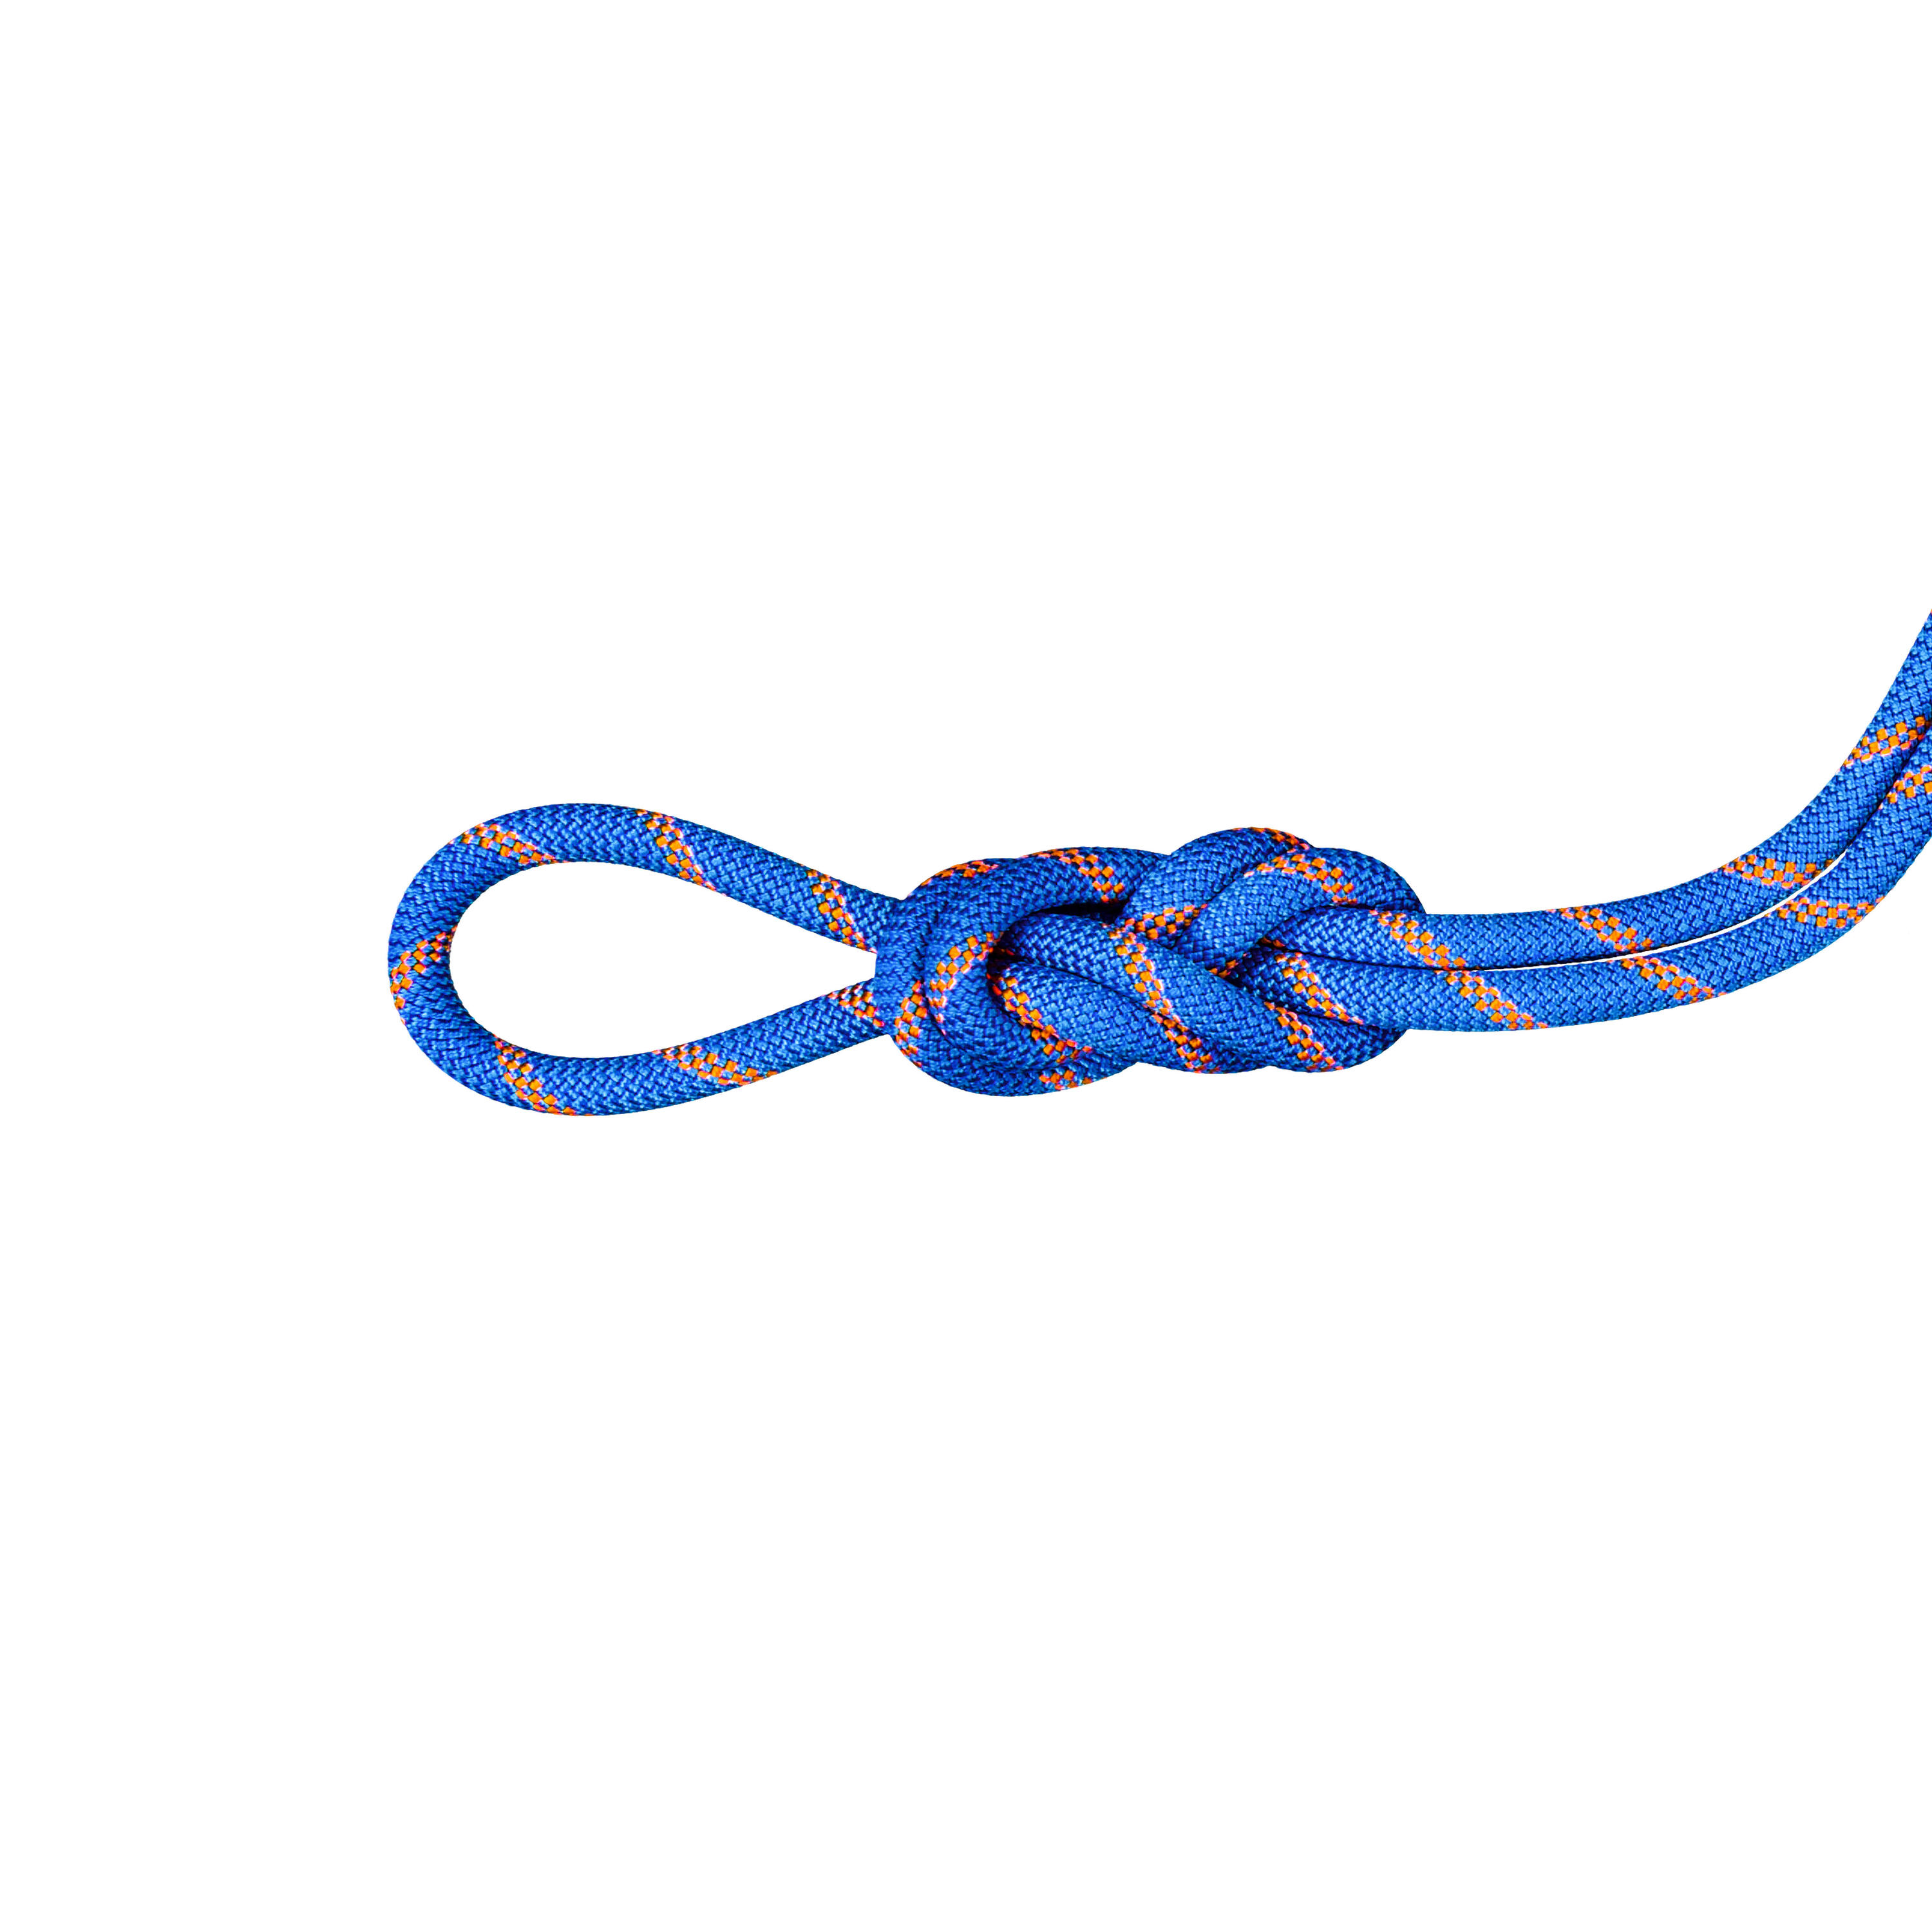 MAMMUT Alpine Sender Dry Triple-Rated Rope 9.0 mm x 50m - Blue